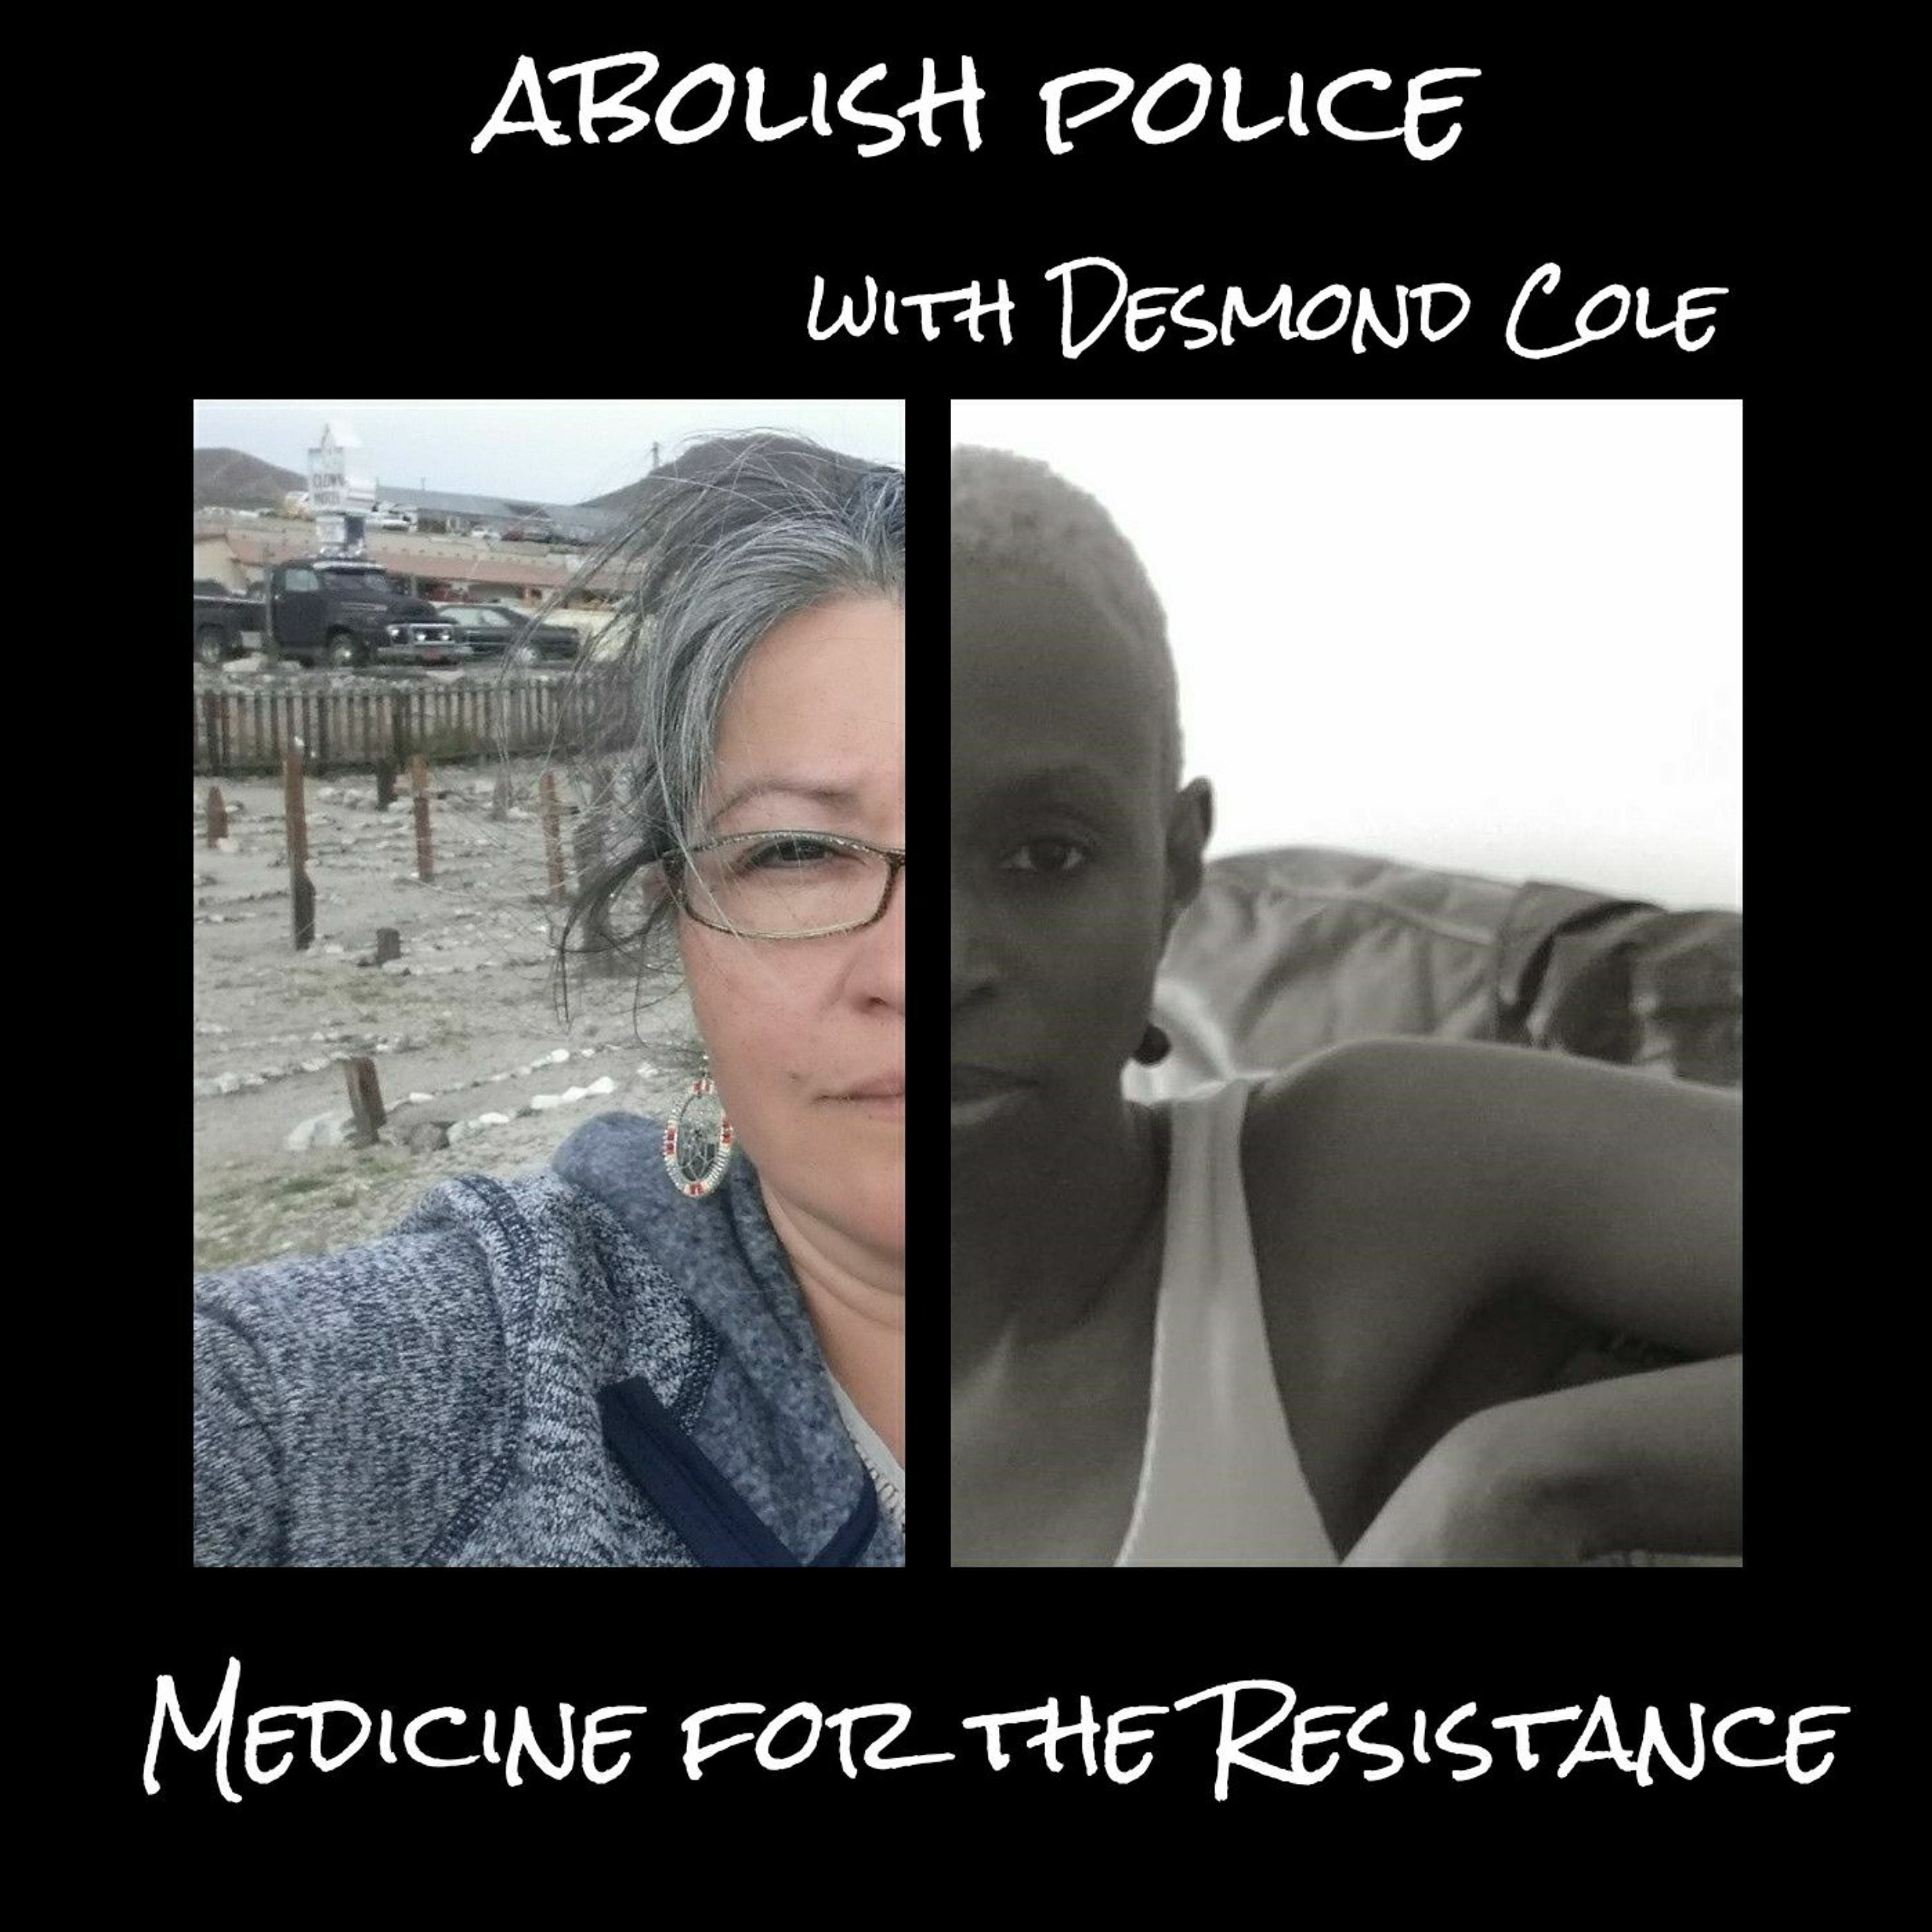 Abolish Police - with Desmond Cole